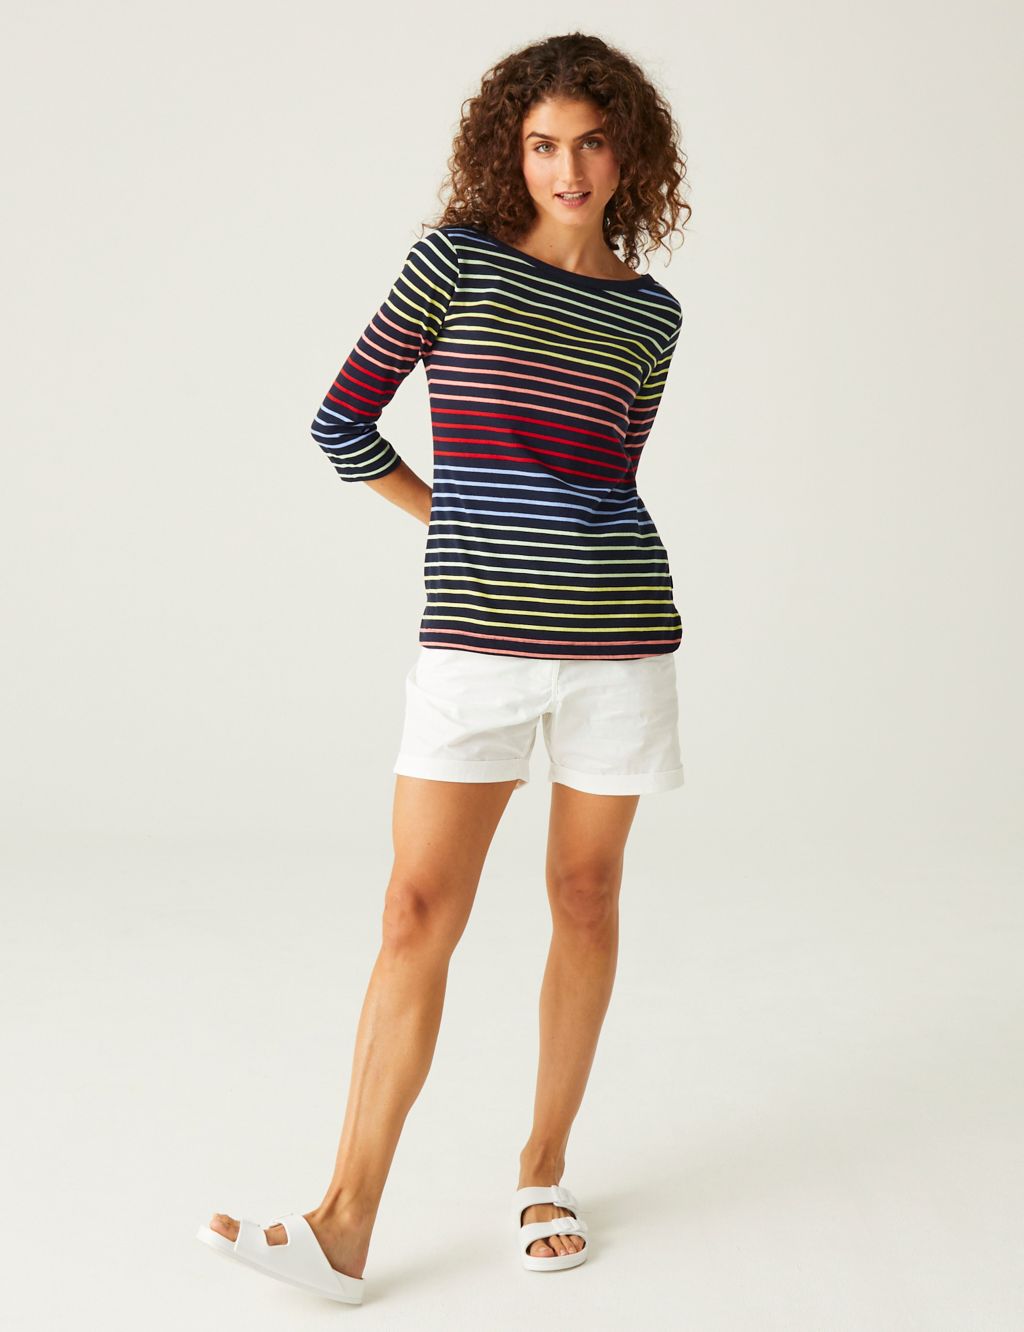 Bayletta Cotton Blend Striped T-Shirt image 3